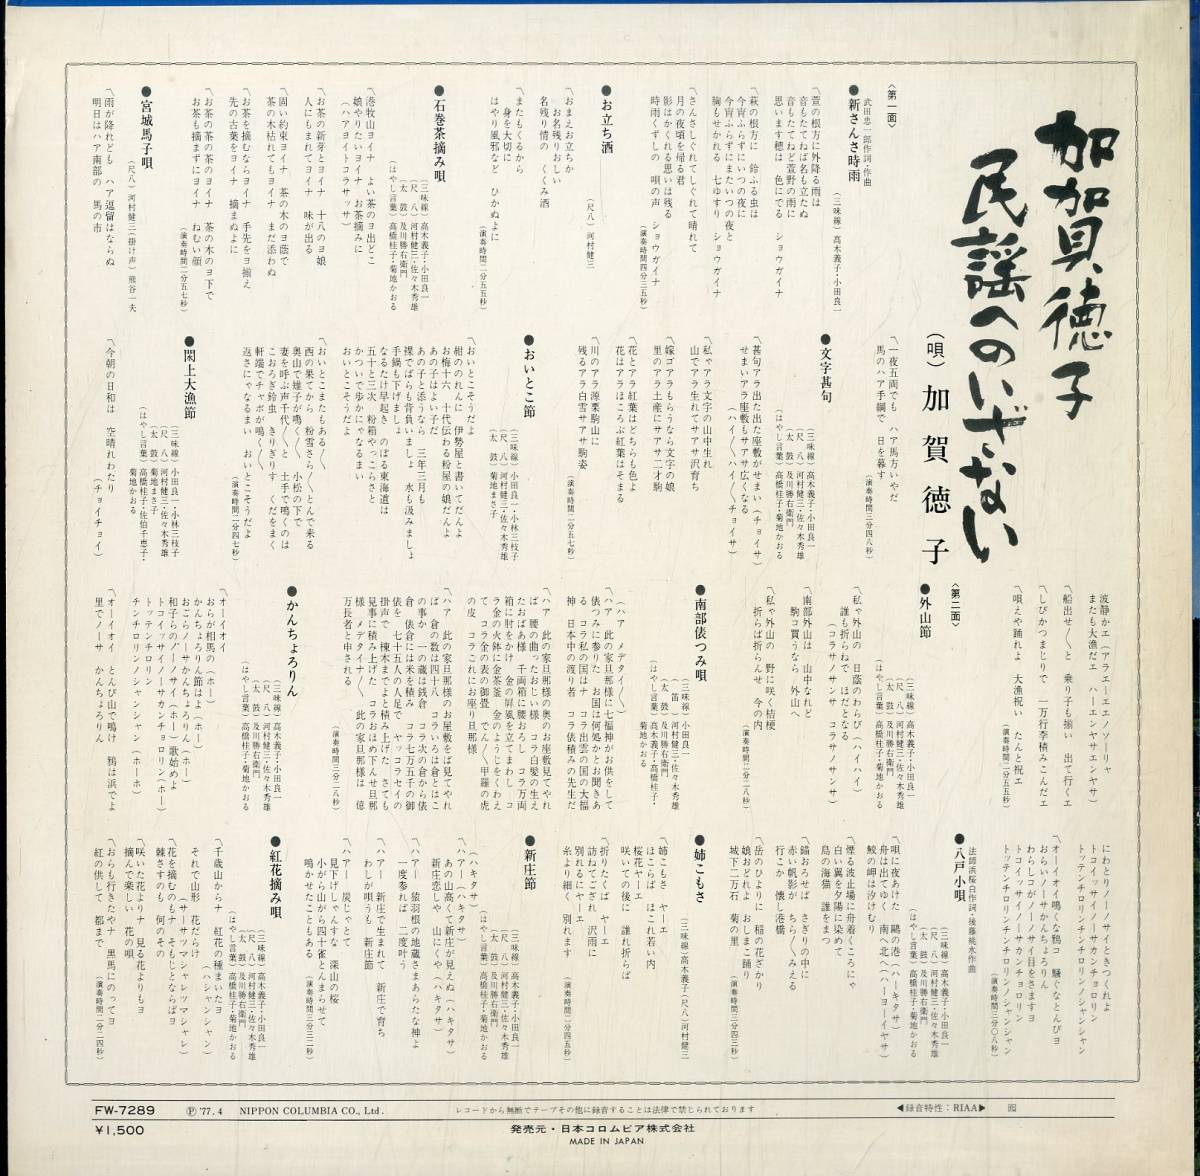 A00503234/LP/加賀徳子「民謡へのいざない (1977年・FW-7289・民謡・ご当地ソング)」_画像2